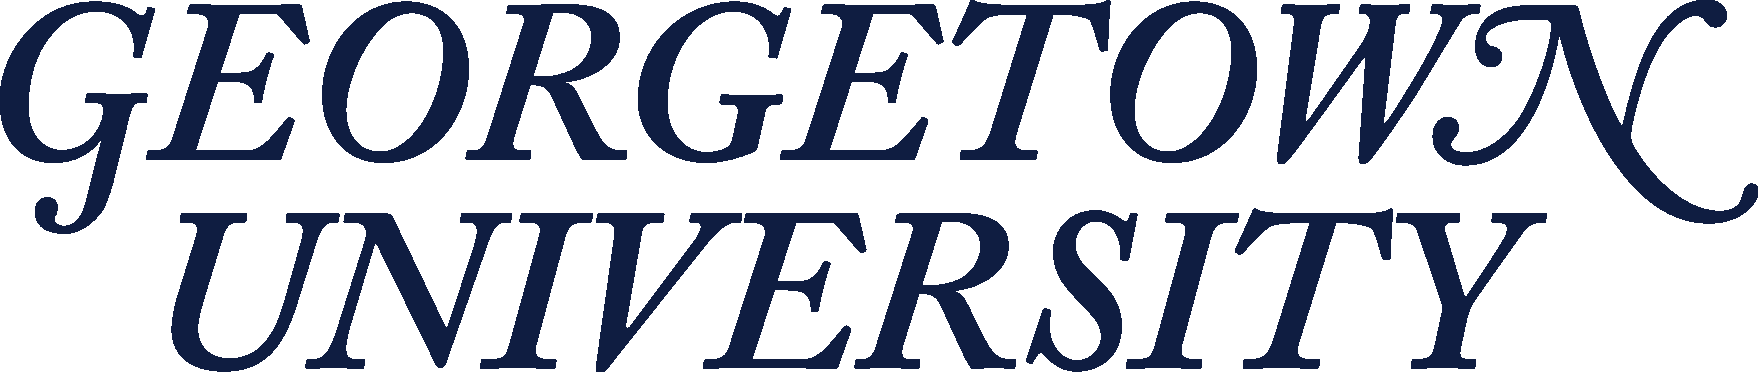 Georgetown University Logo png